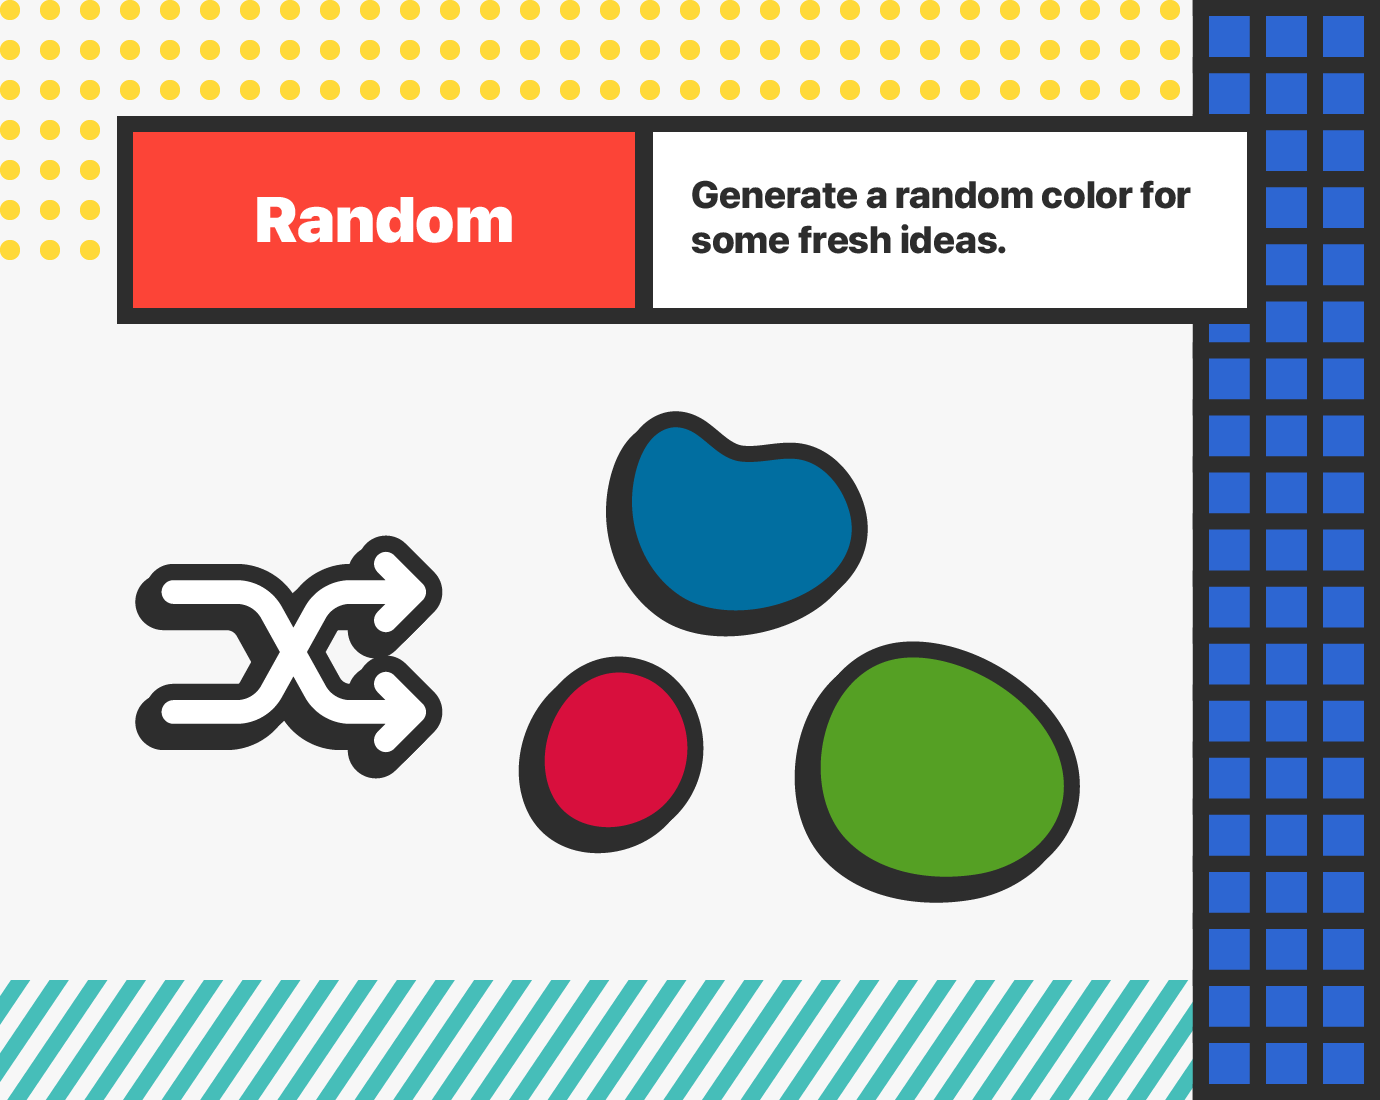 Feature 4 - Random: Generate a random color for some fresh ideas